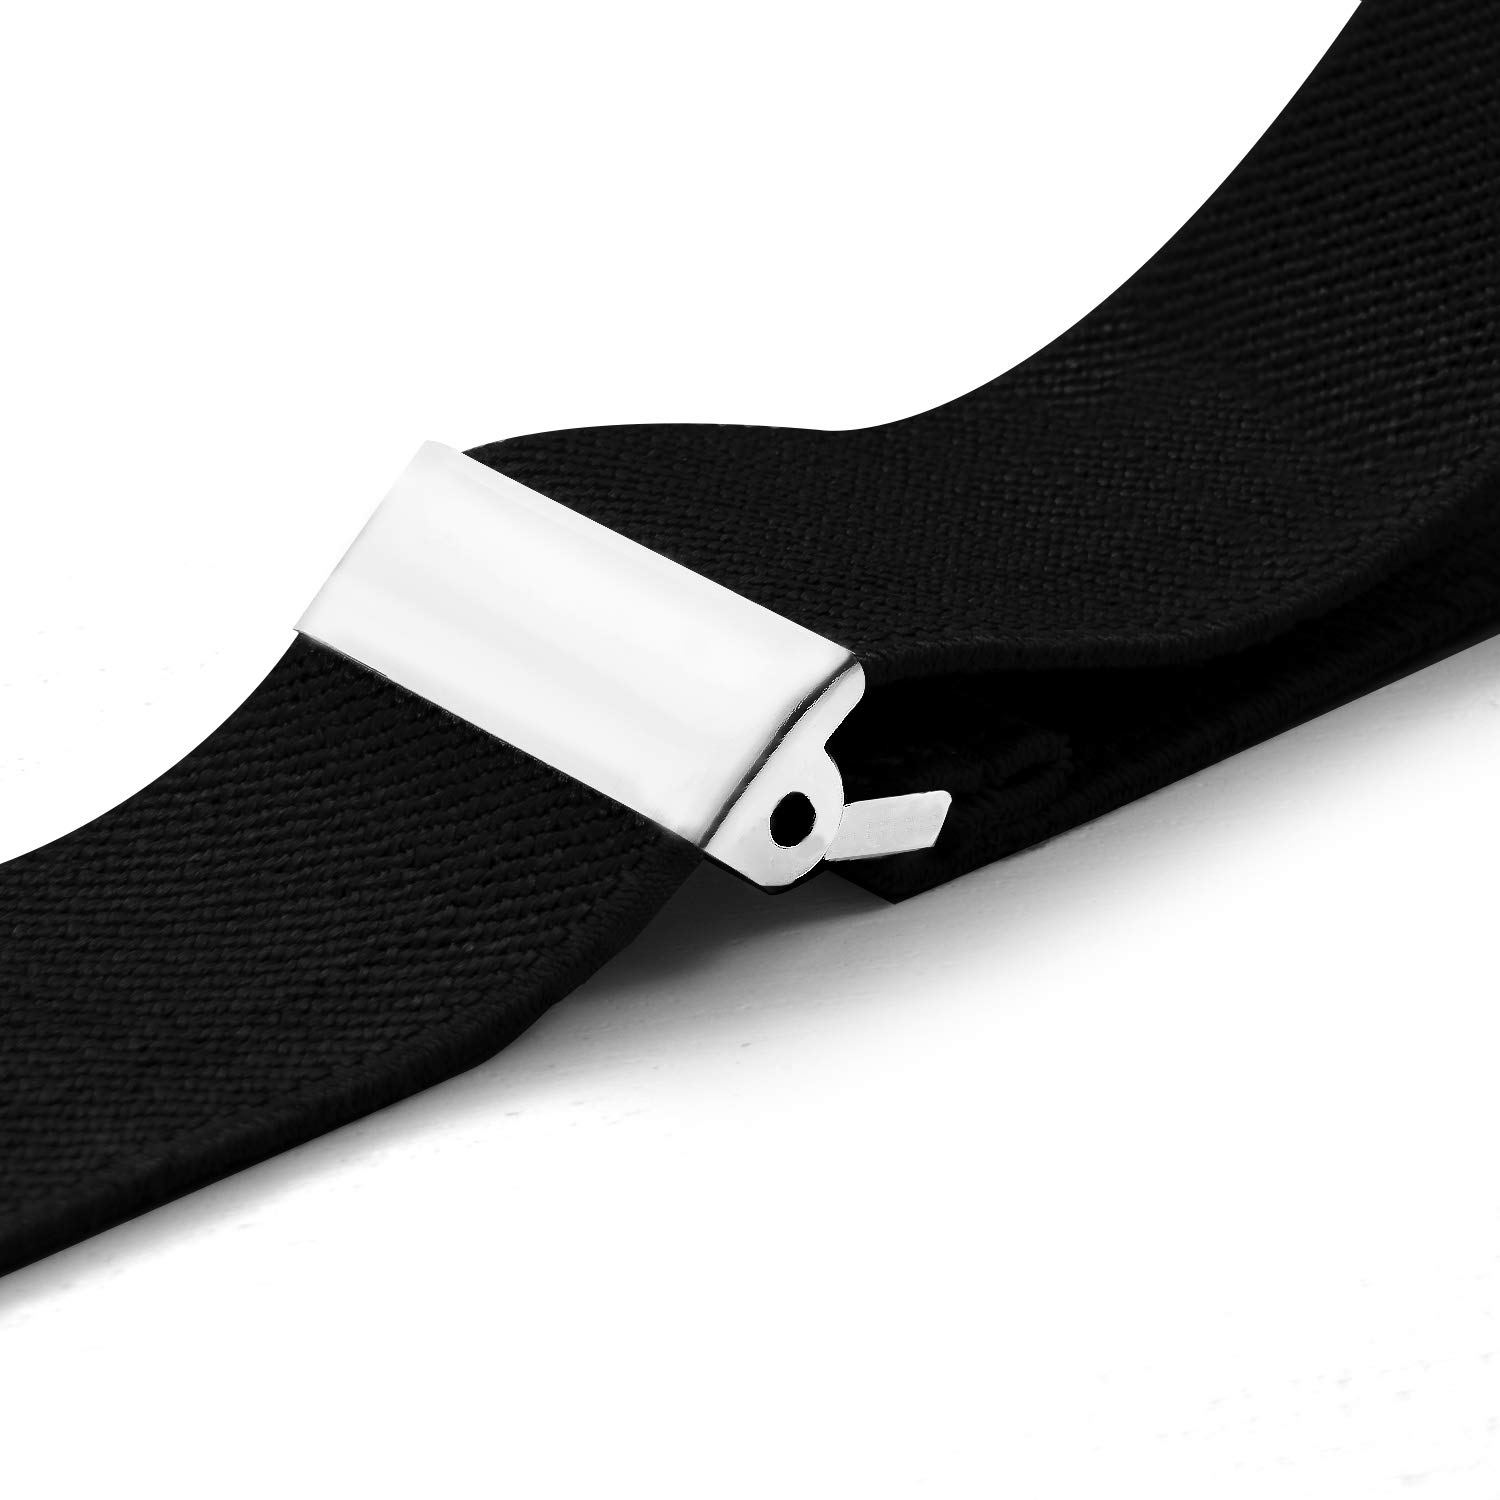 habibee Solid Color Mens Suspender Y Shape with Strong Clips Adjustable Braces